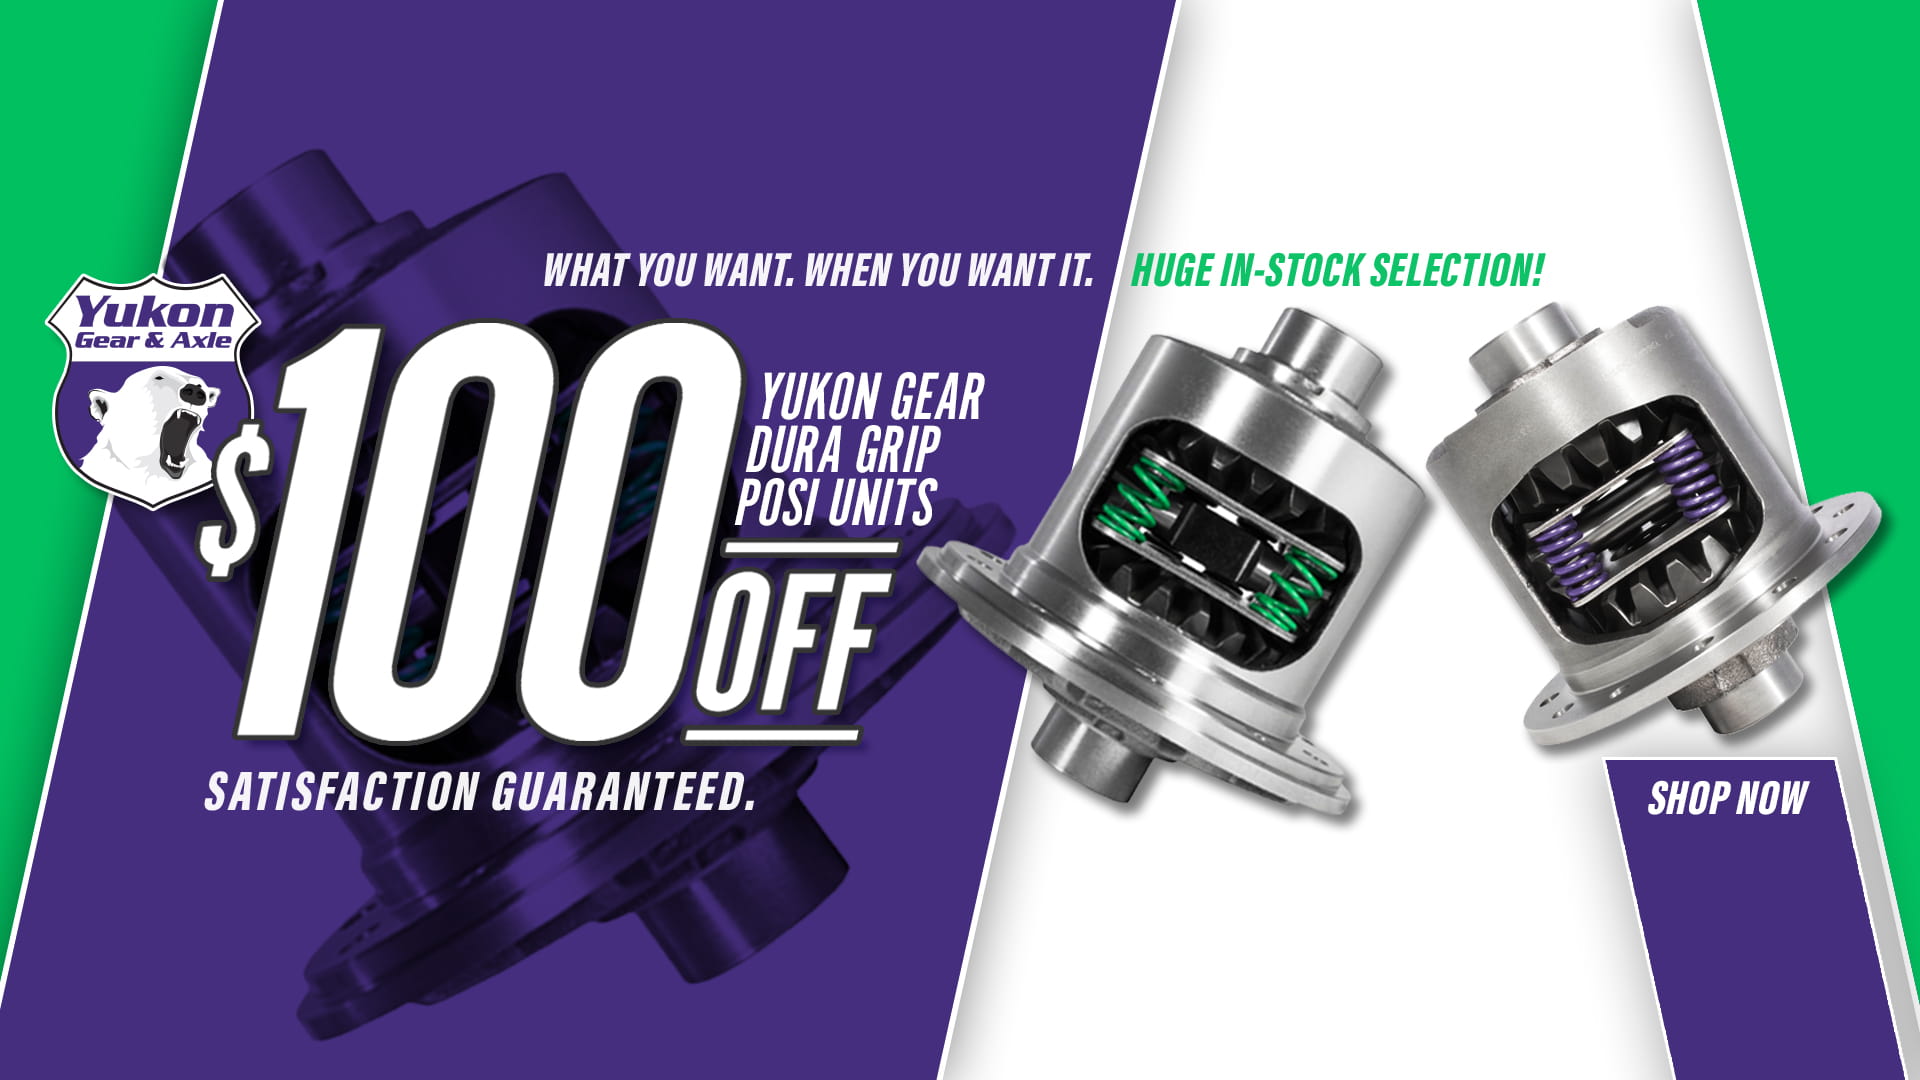 Save $100 On All Yukon Gear DuraGrip Posi Units